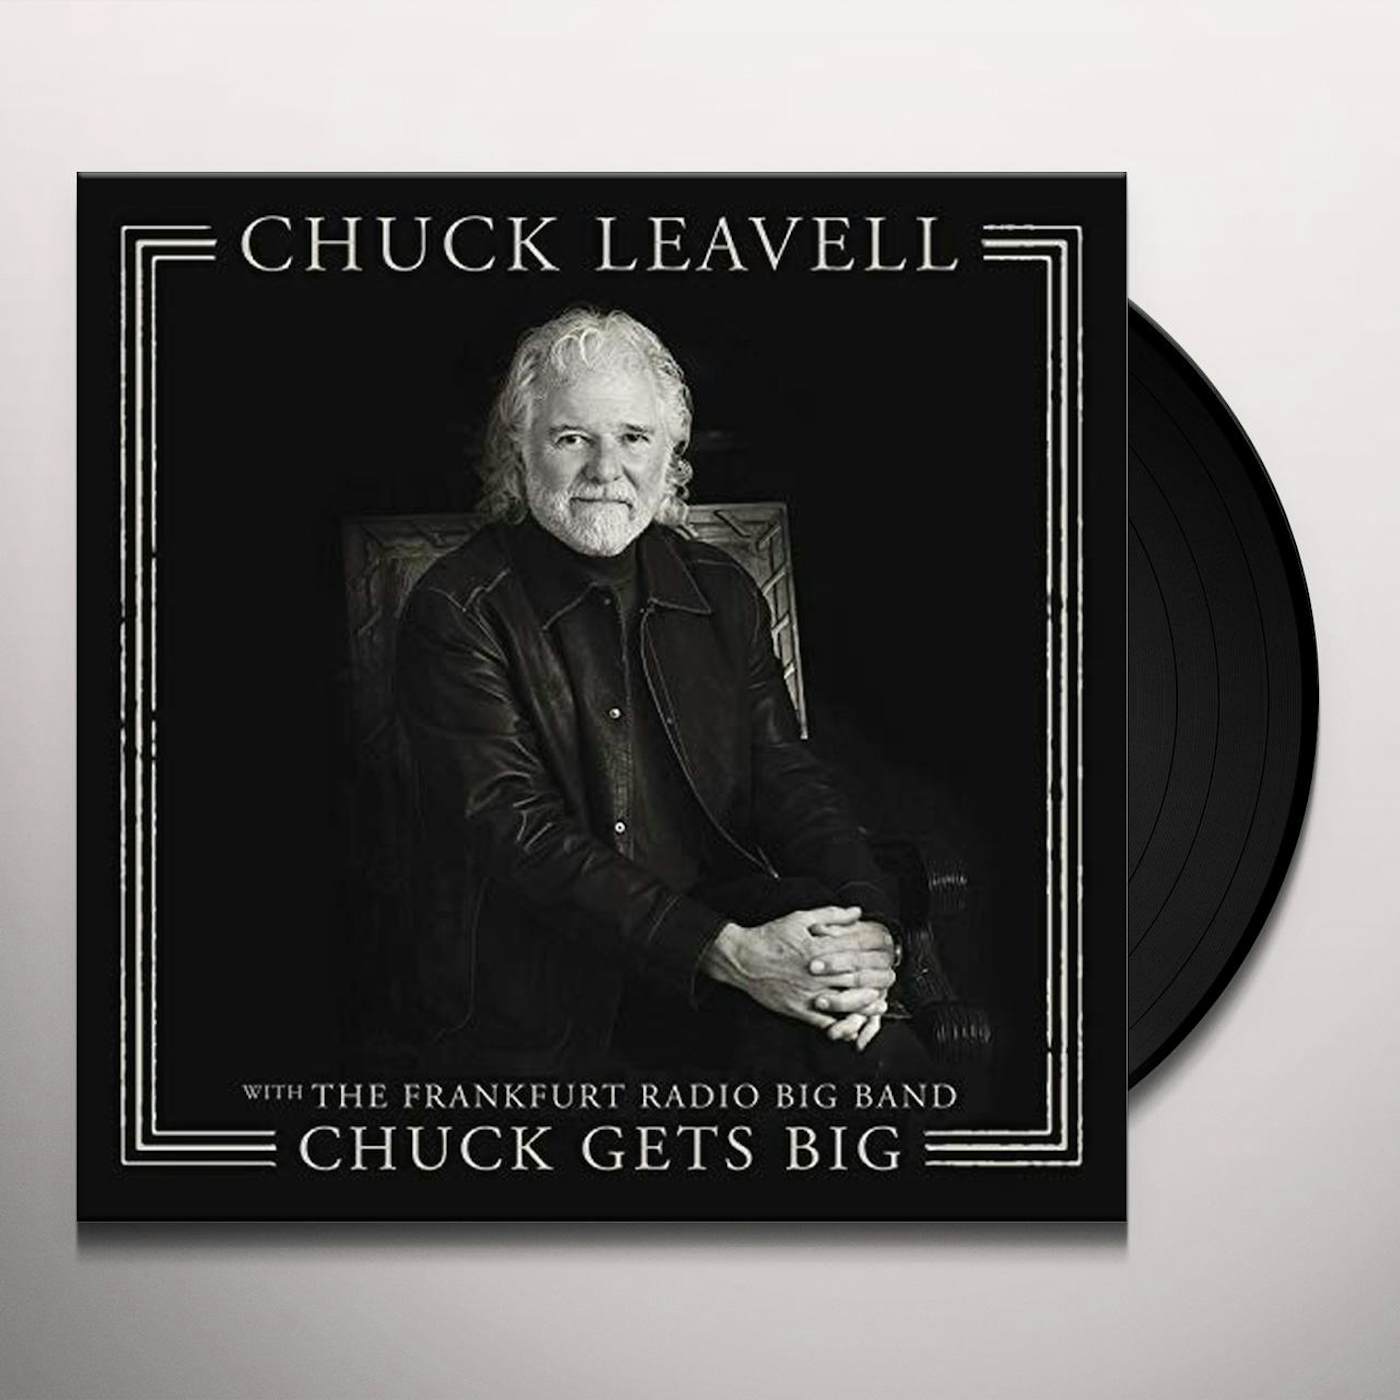 Chuck Leavell CHUCK GETS BIG (WITH THE FRANKFURT RADIO BIG BAND) Vinyl Record